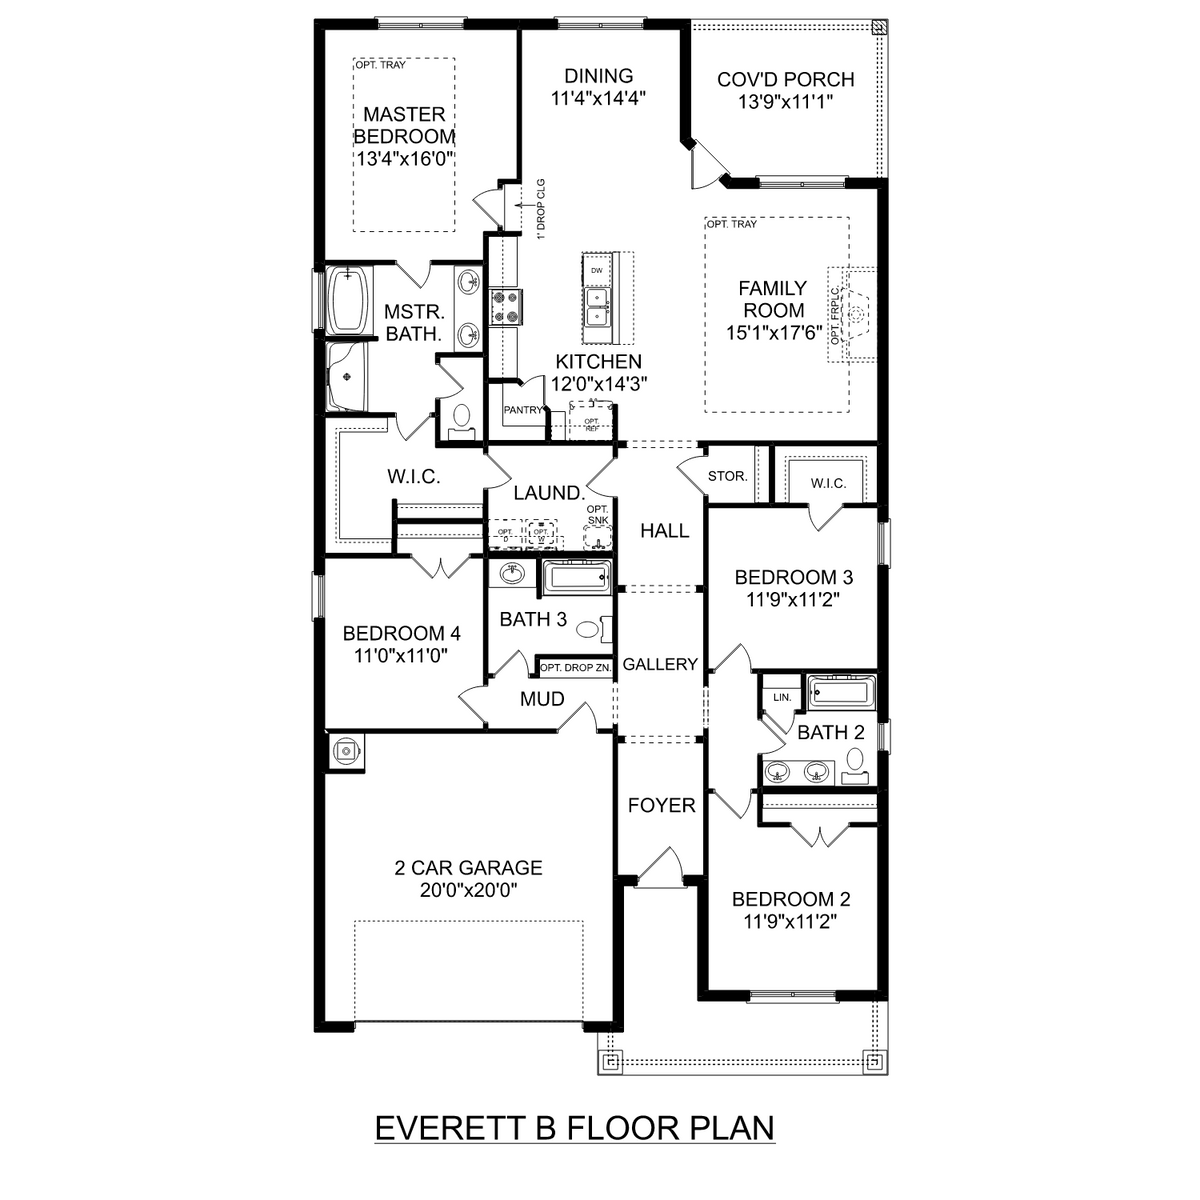 1 - The Everett B floor plan layout for 302 Cherokee Glen Avenue in Davidson Homes' Wood Trail community.